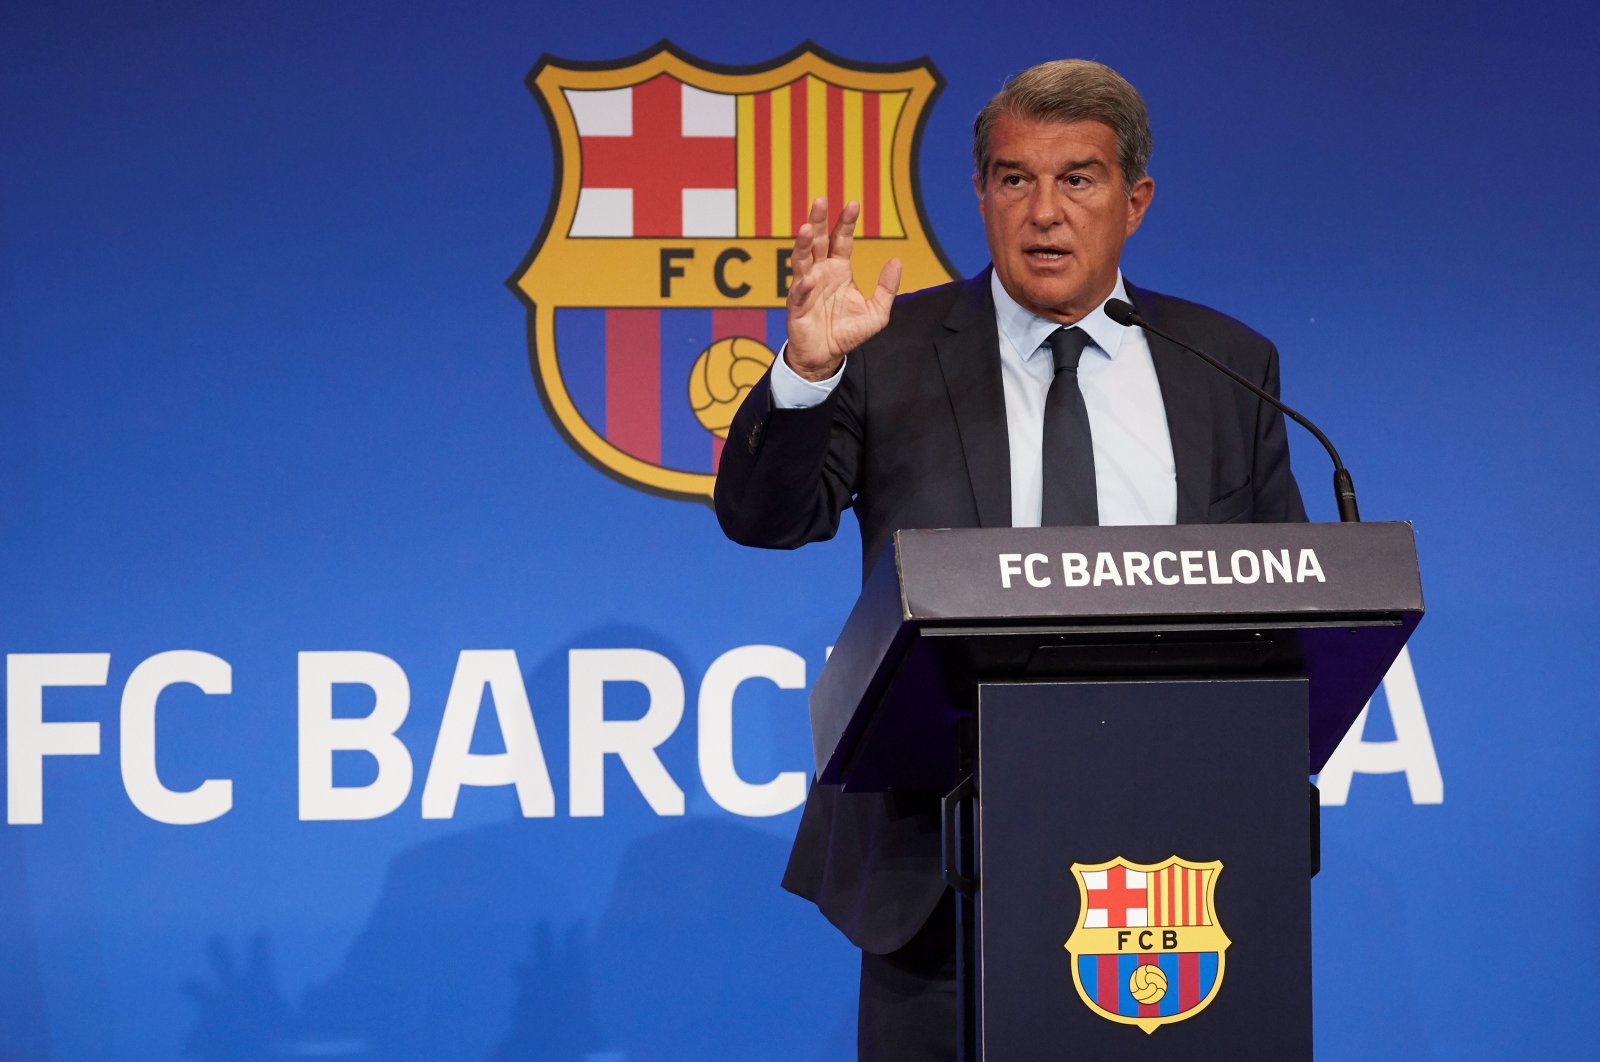 FC Barcelona President Joan Laporta addresses a press conference at Camp Nou, Barcelona, Spain, Aug. 16, 2021. (EPA Photo)